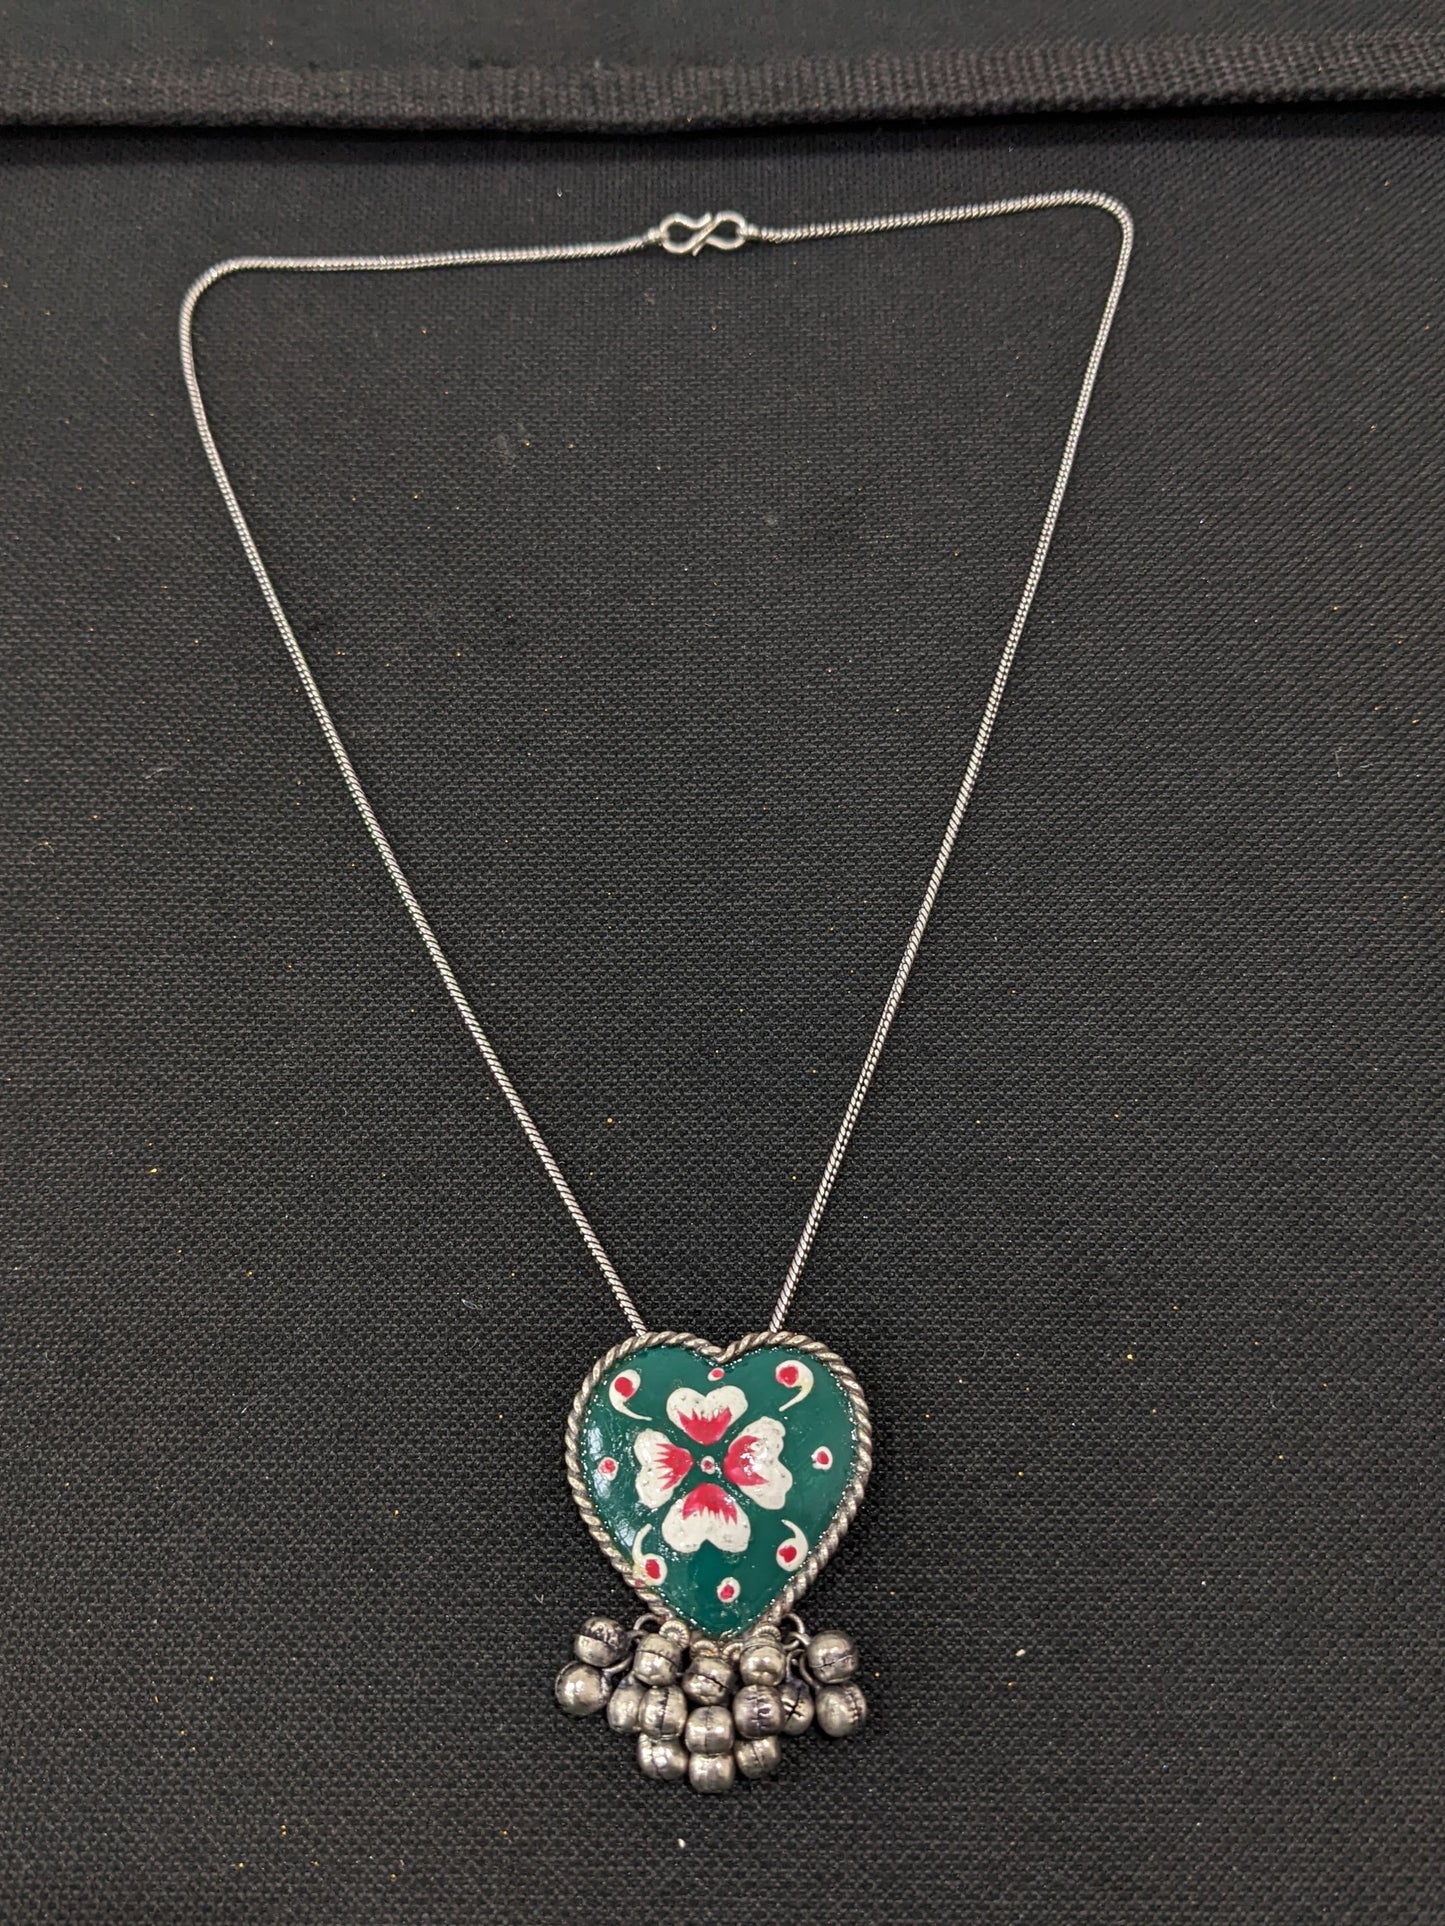 Heart Pendant Silver Chain Oxidized Silver Necklace